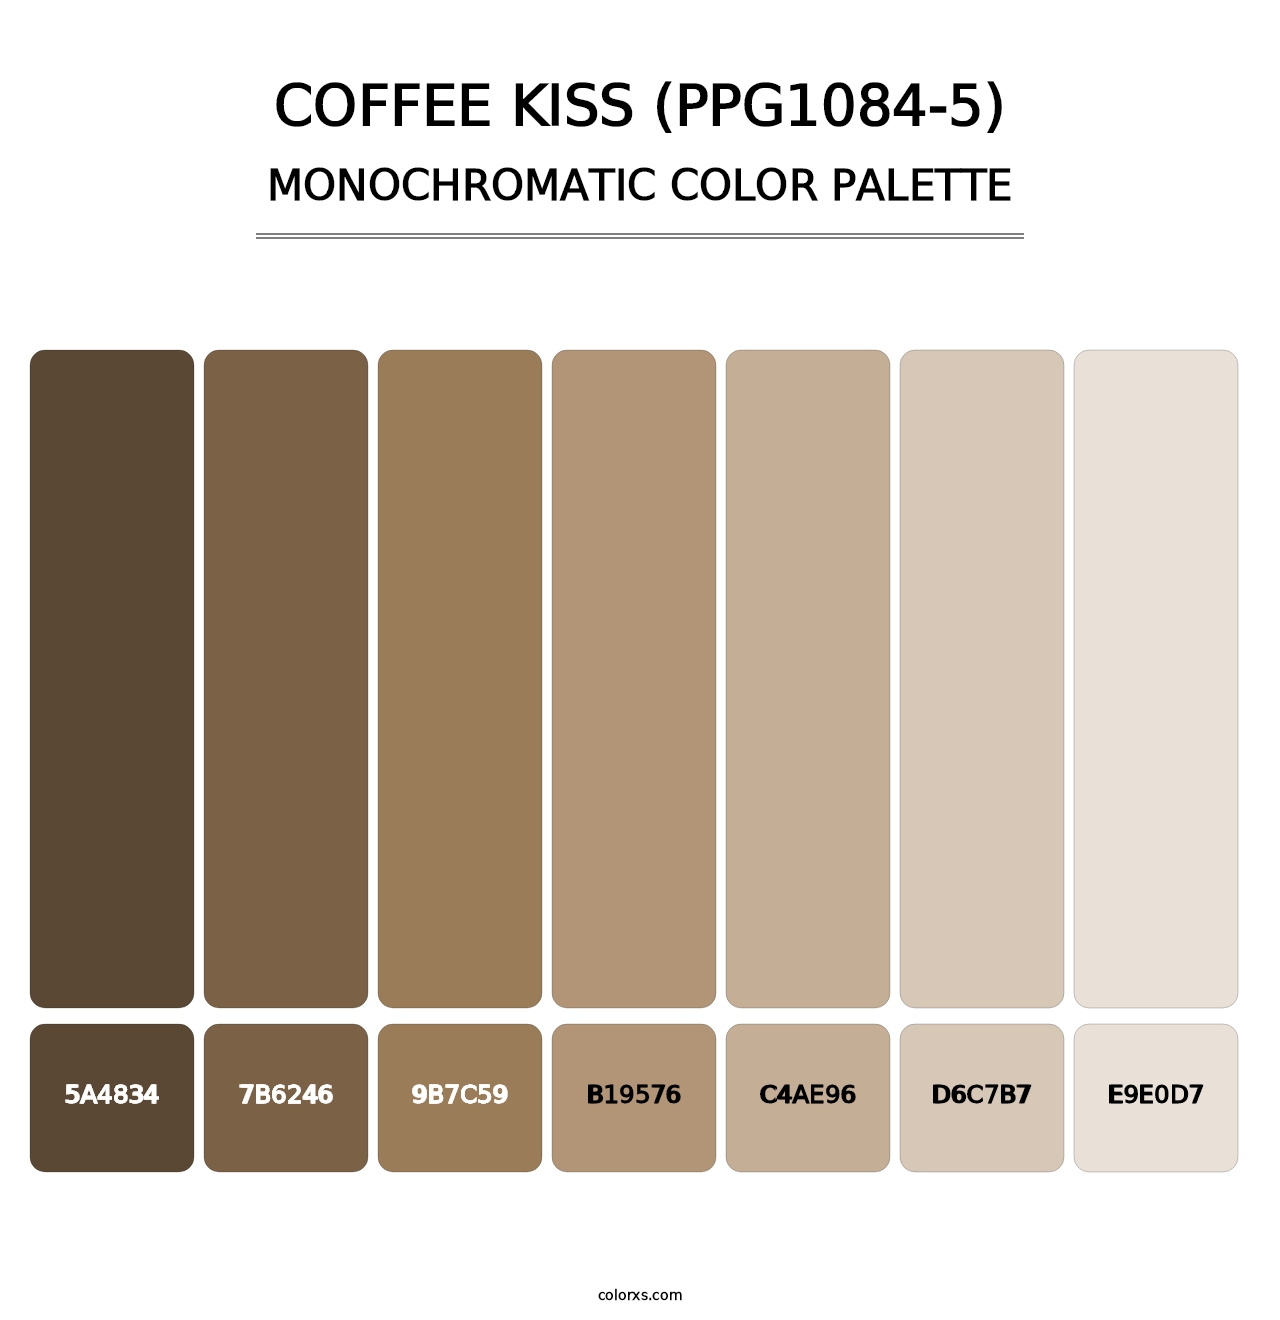 Coffee Kiss (PPG1084-5) - Monochromatic Color Palette